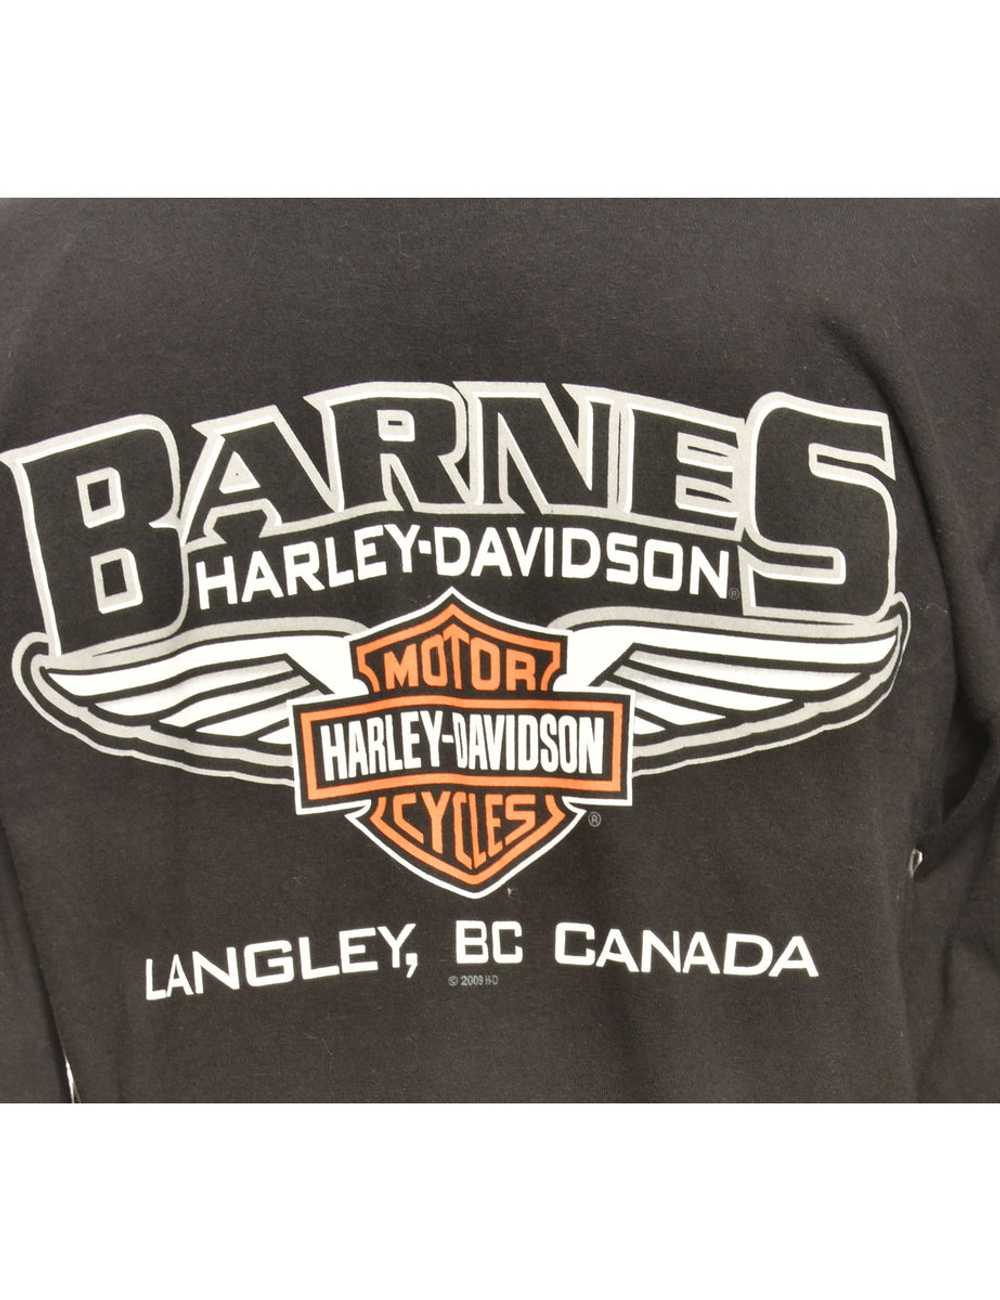 Harley Davidson Printed T-shirt - M - image 5